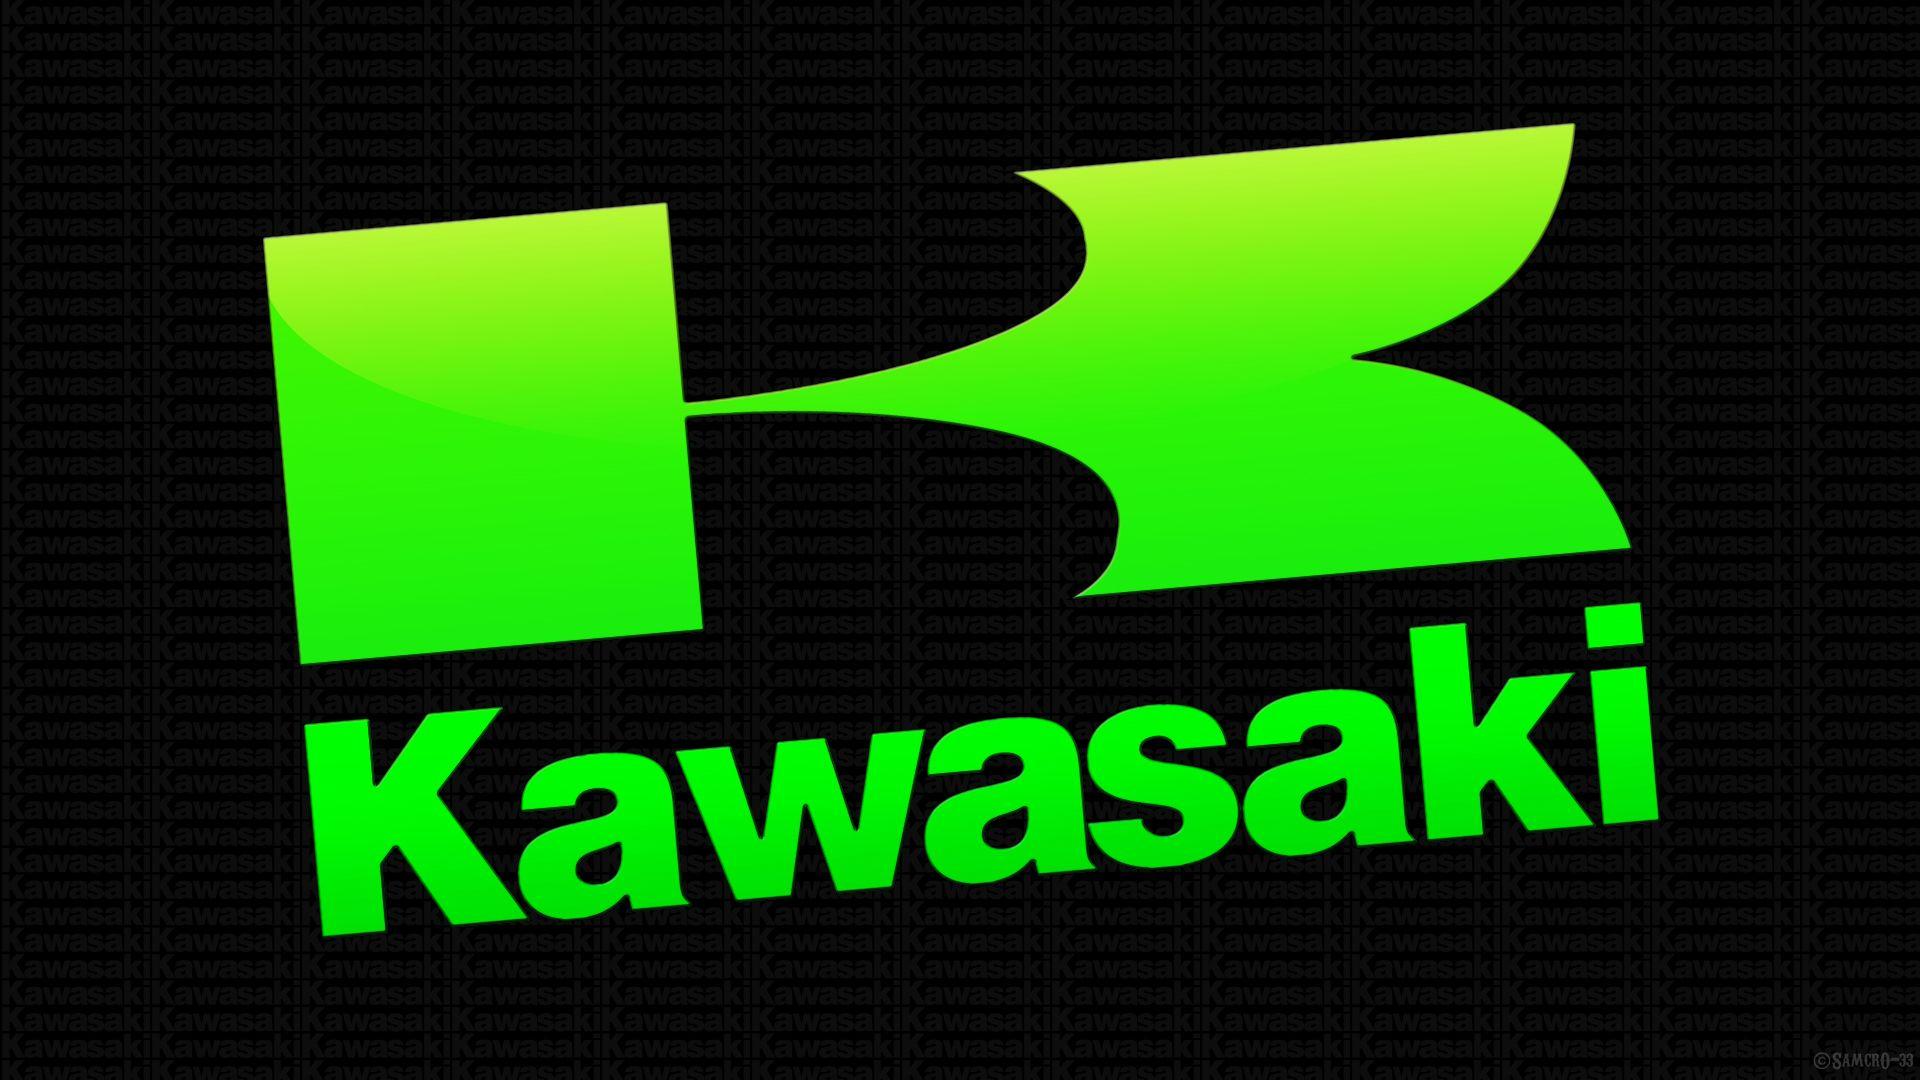 30k Kawasaki Ninja Pictures  Download Free Images on Unsplash